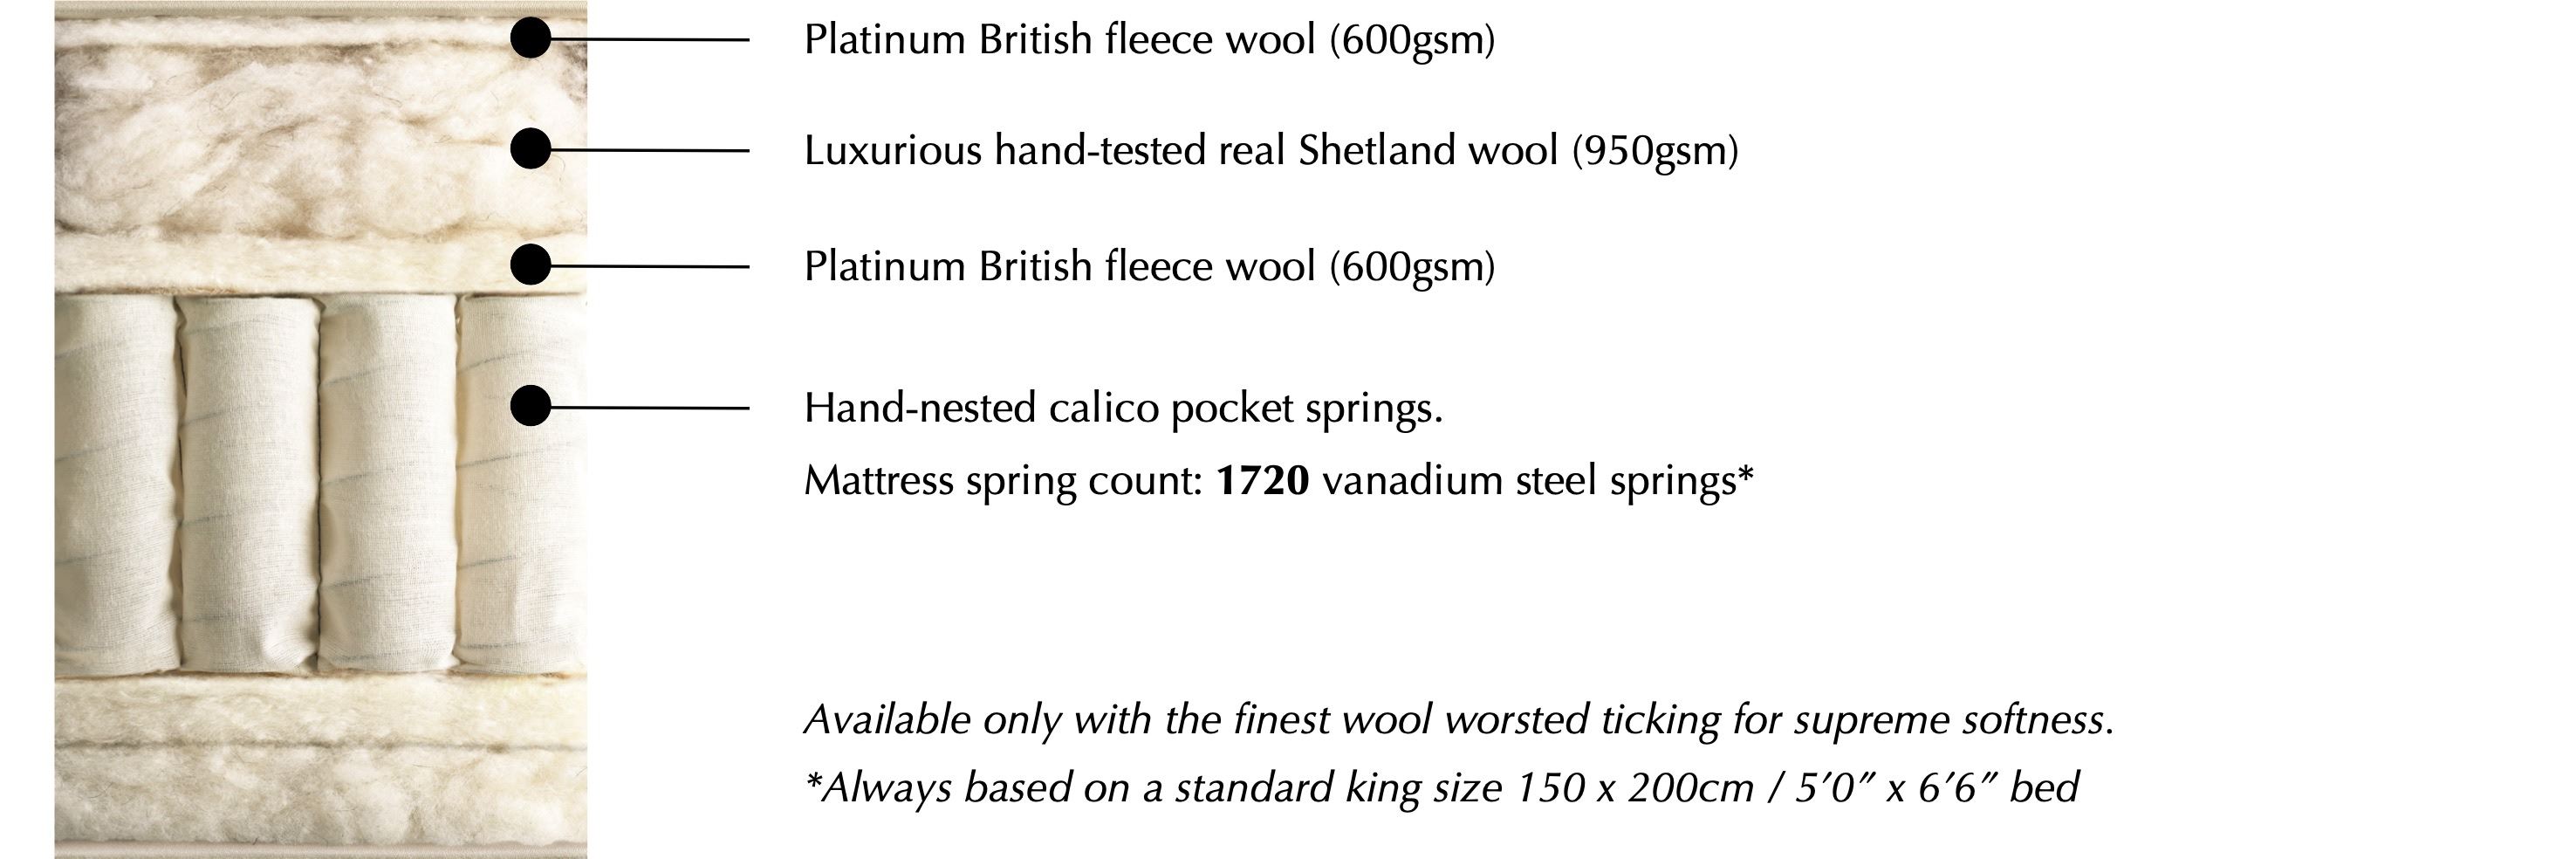 Vispring Shetland Adjustable Bed Mattress specification: materials and construction